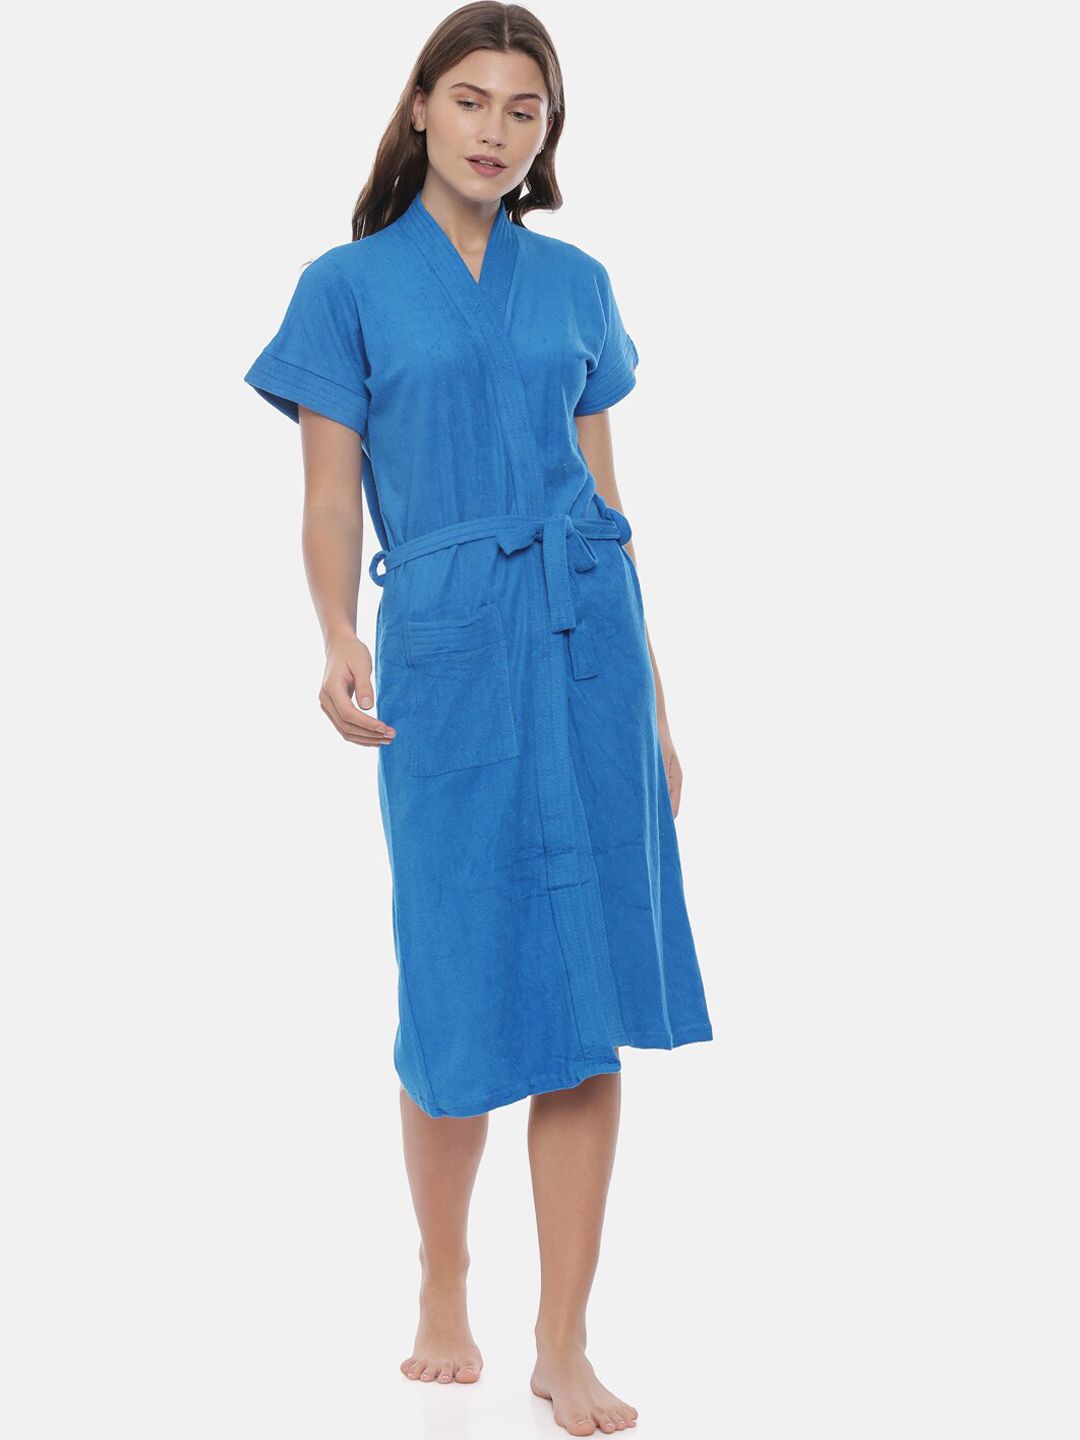 GOLDSTROMS Women Blue Solid Cotton Bath Robe Price in India